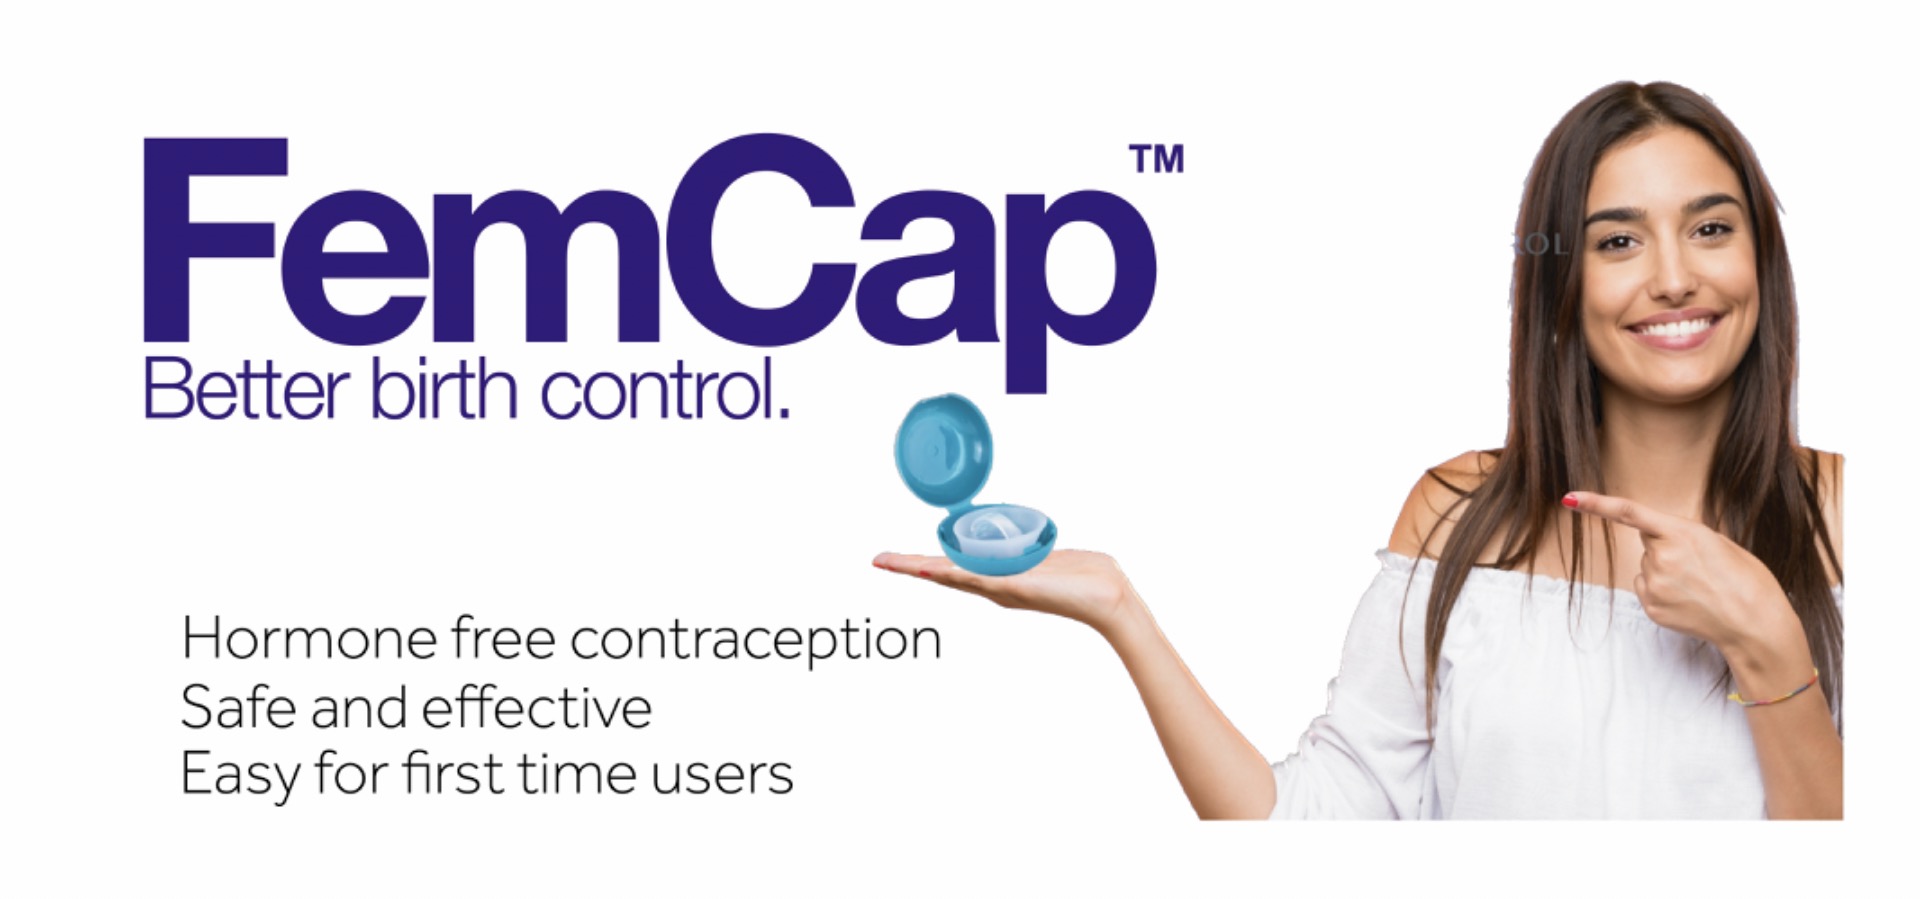 Buy The FemCap Cervical Cap Without Prescription In The UK